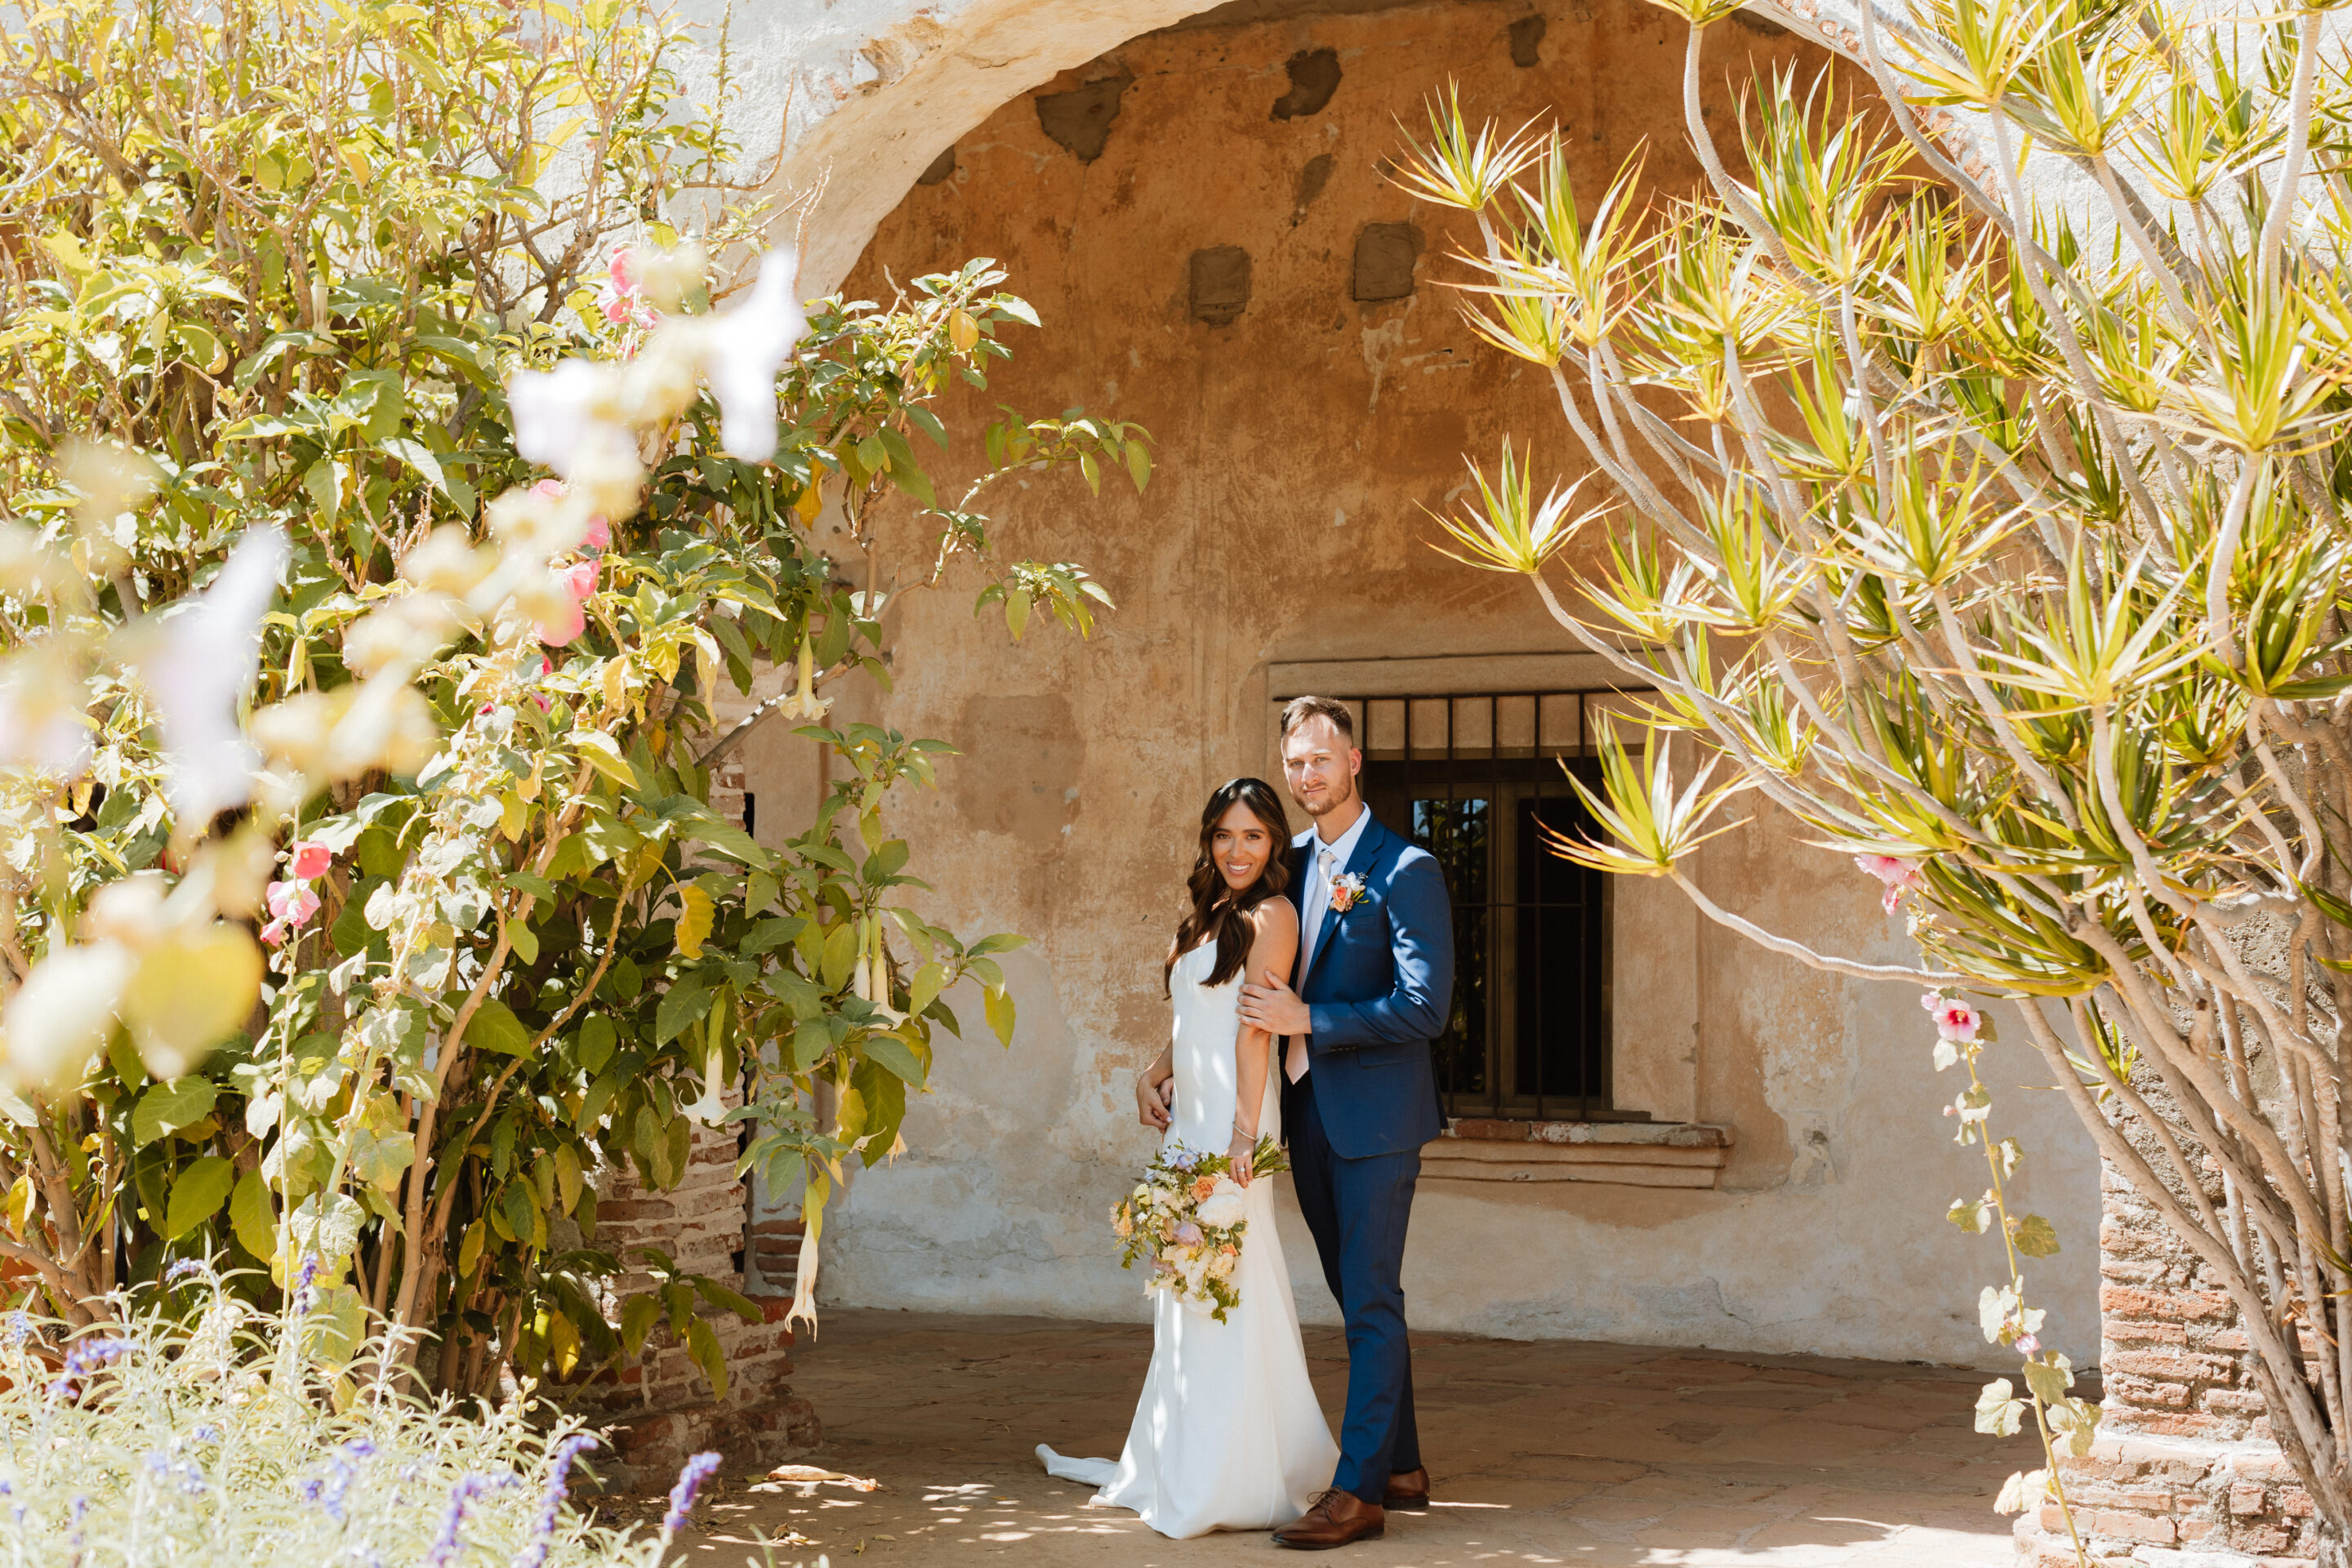 A “Secret Garden Wedding” at Mission San Juan Capistrano, CA – Michelle & Tanner